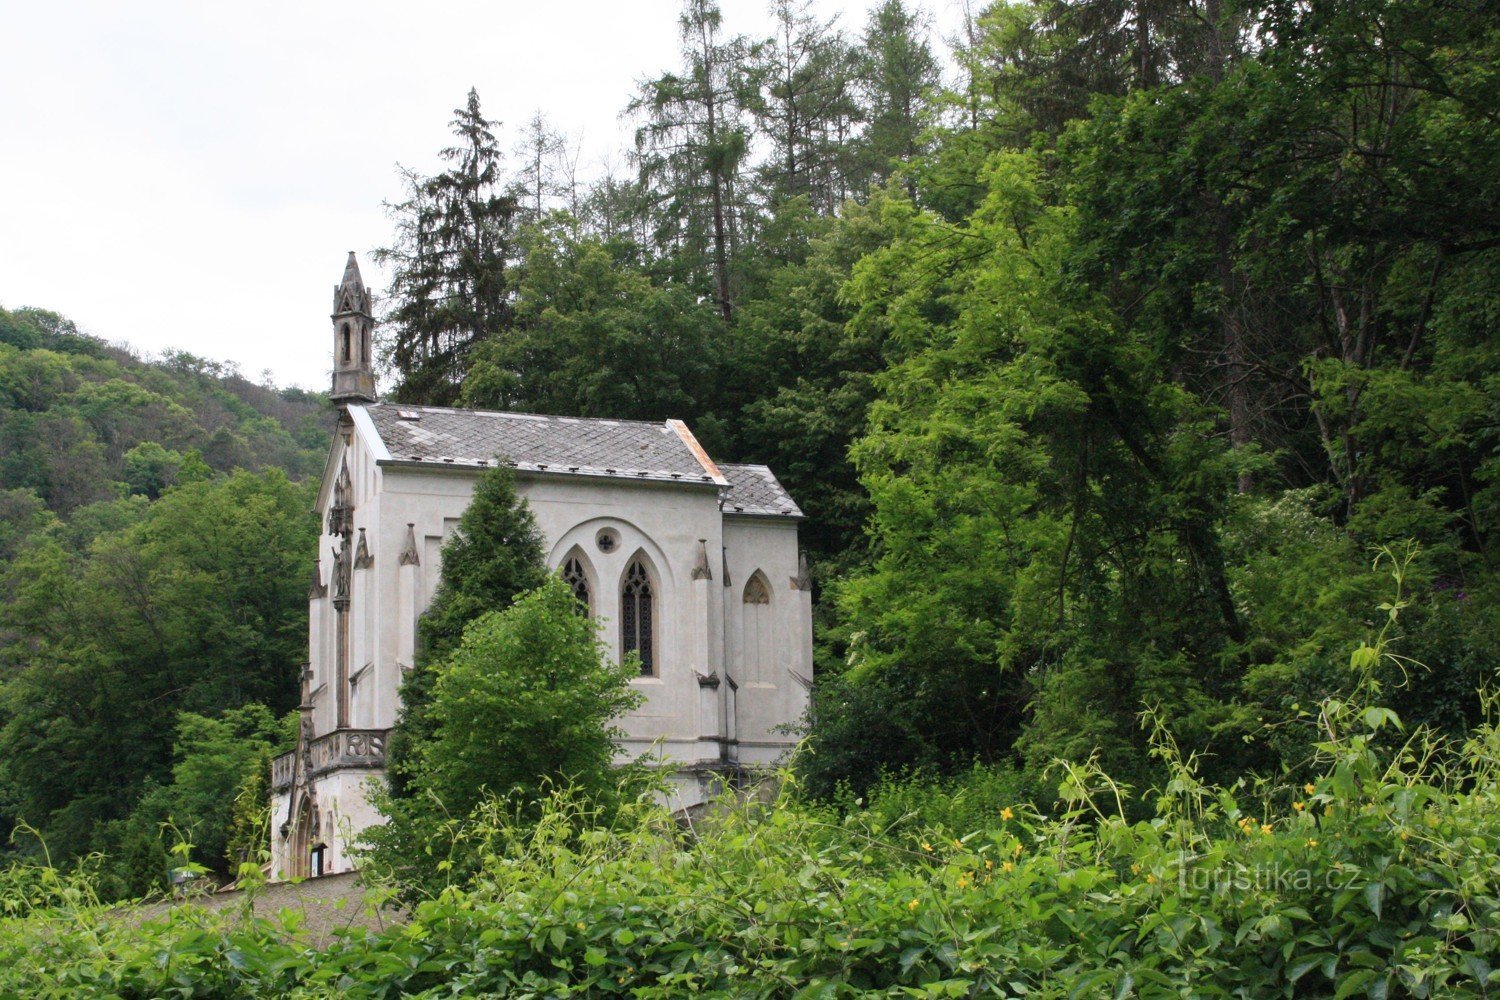 St. Jan pod Skalou e a capela do cemitério - a capela de St. Maximiliano